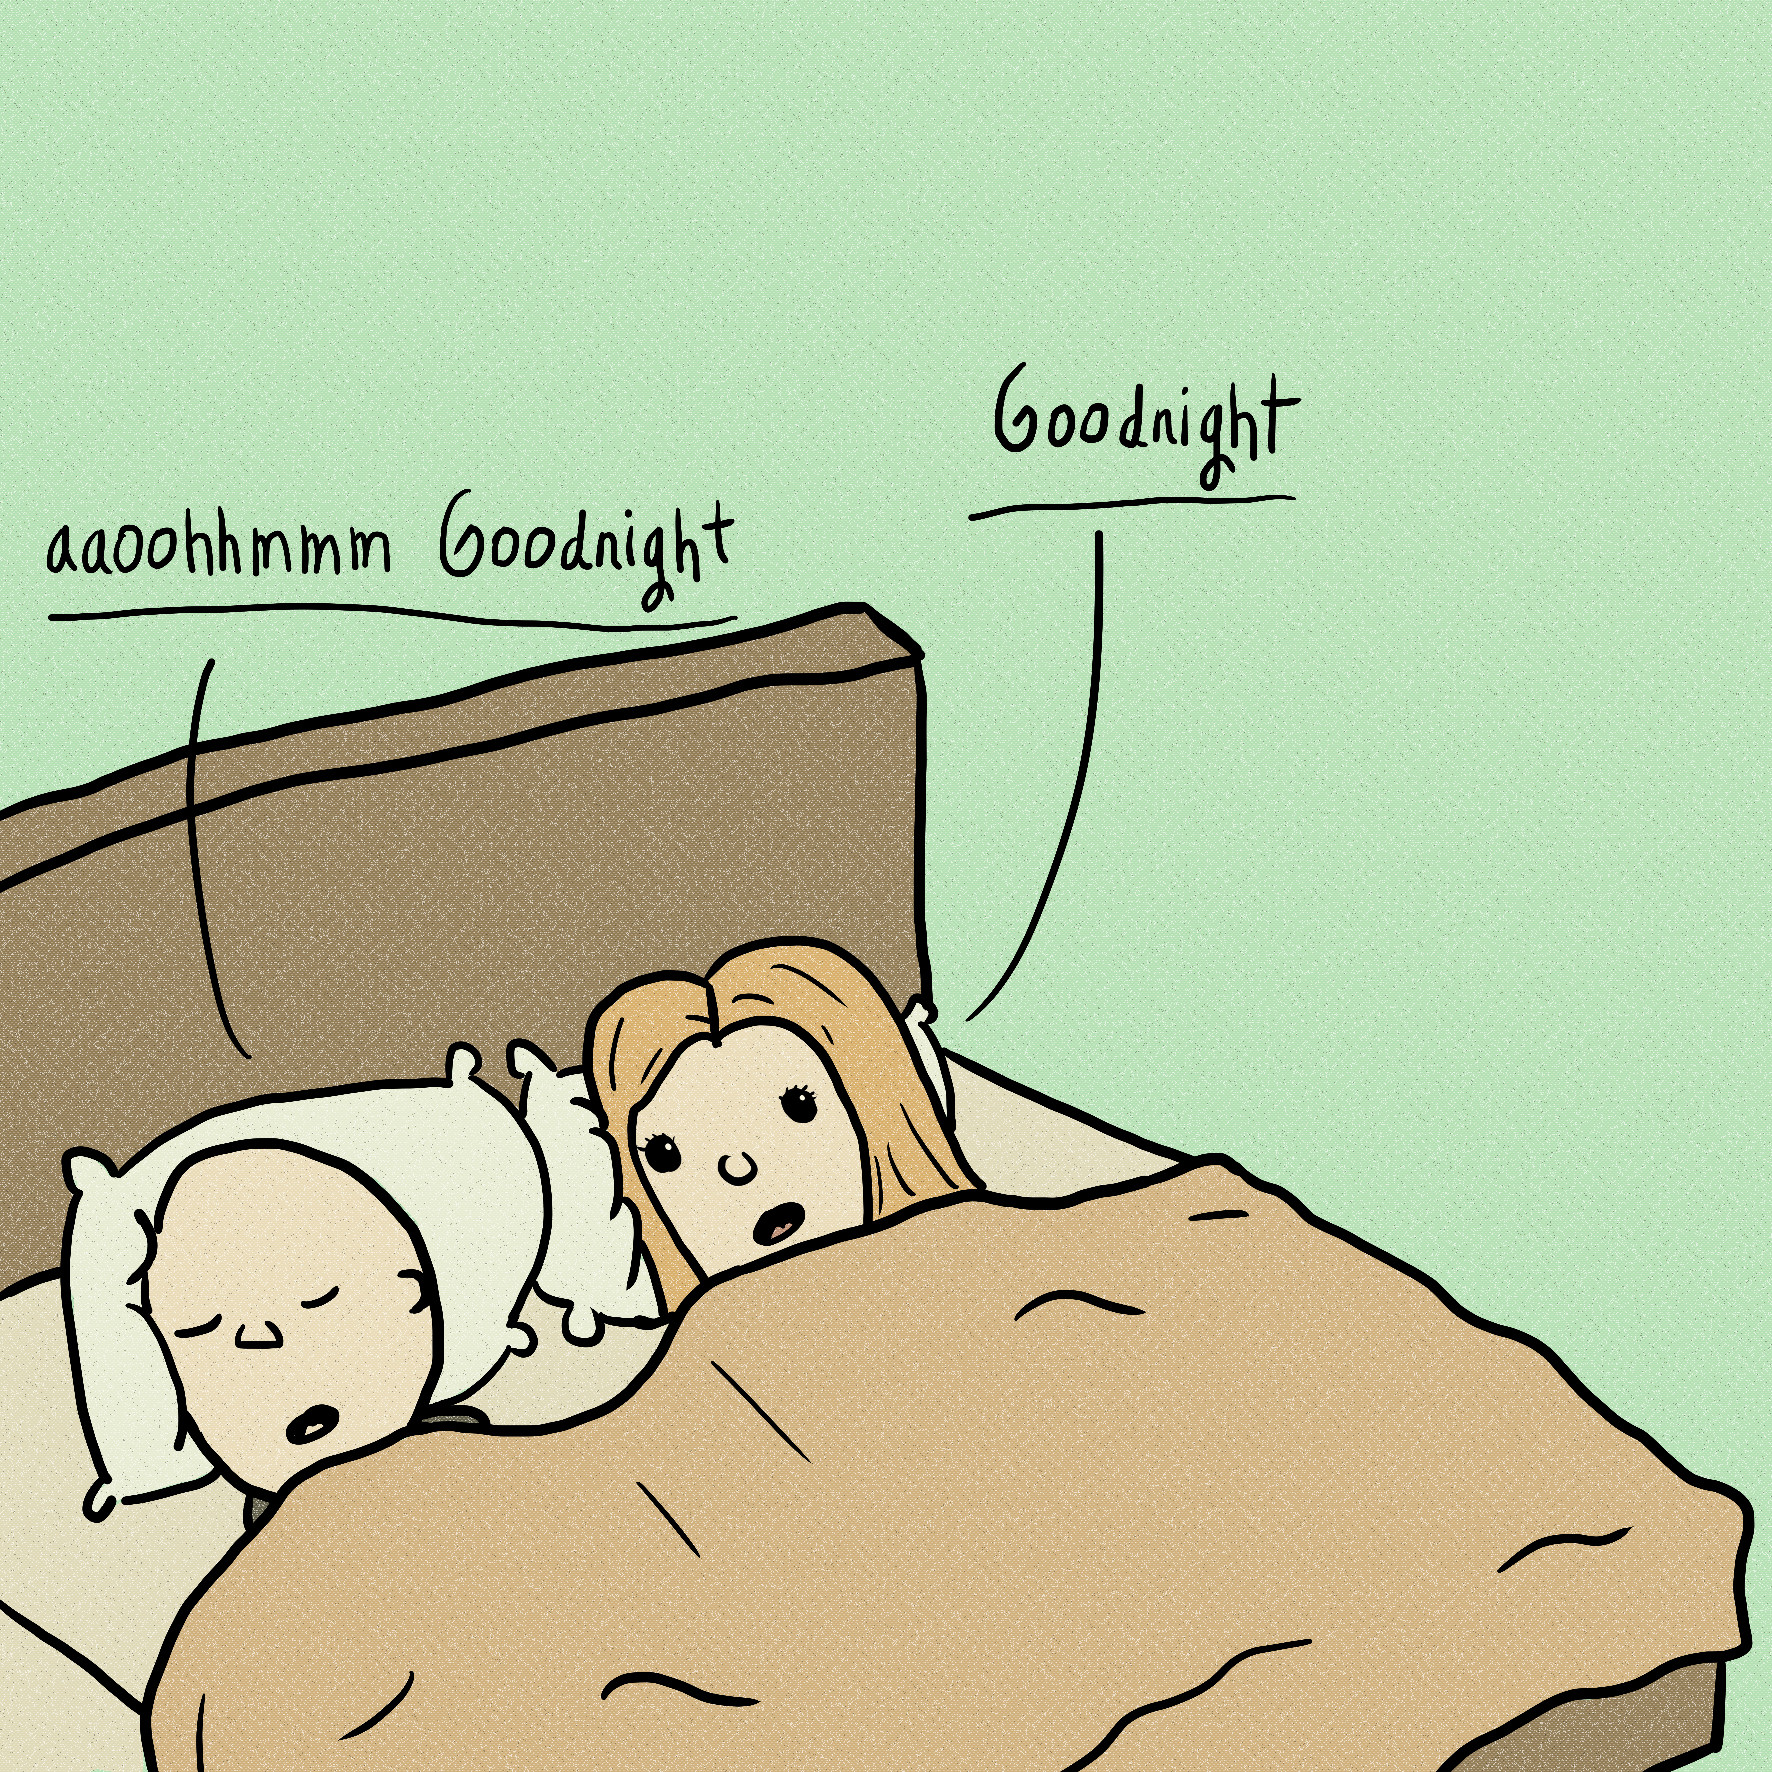 "the goodnight" comic.